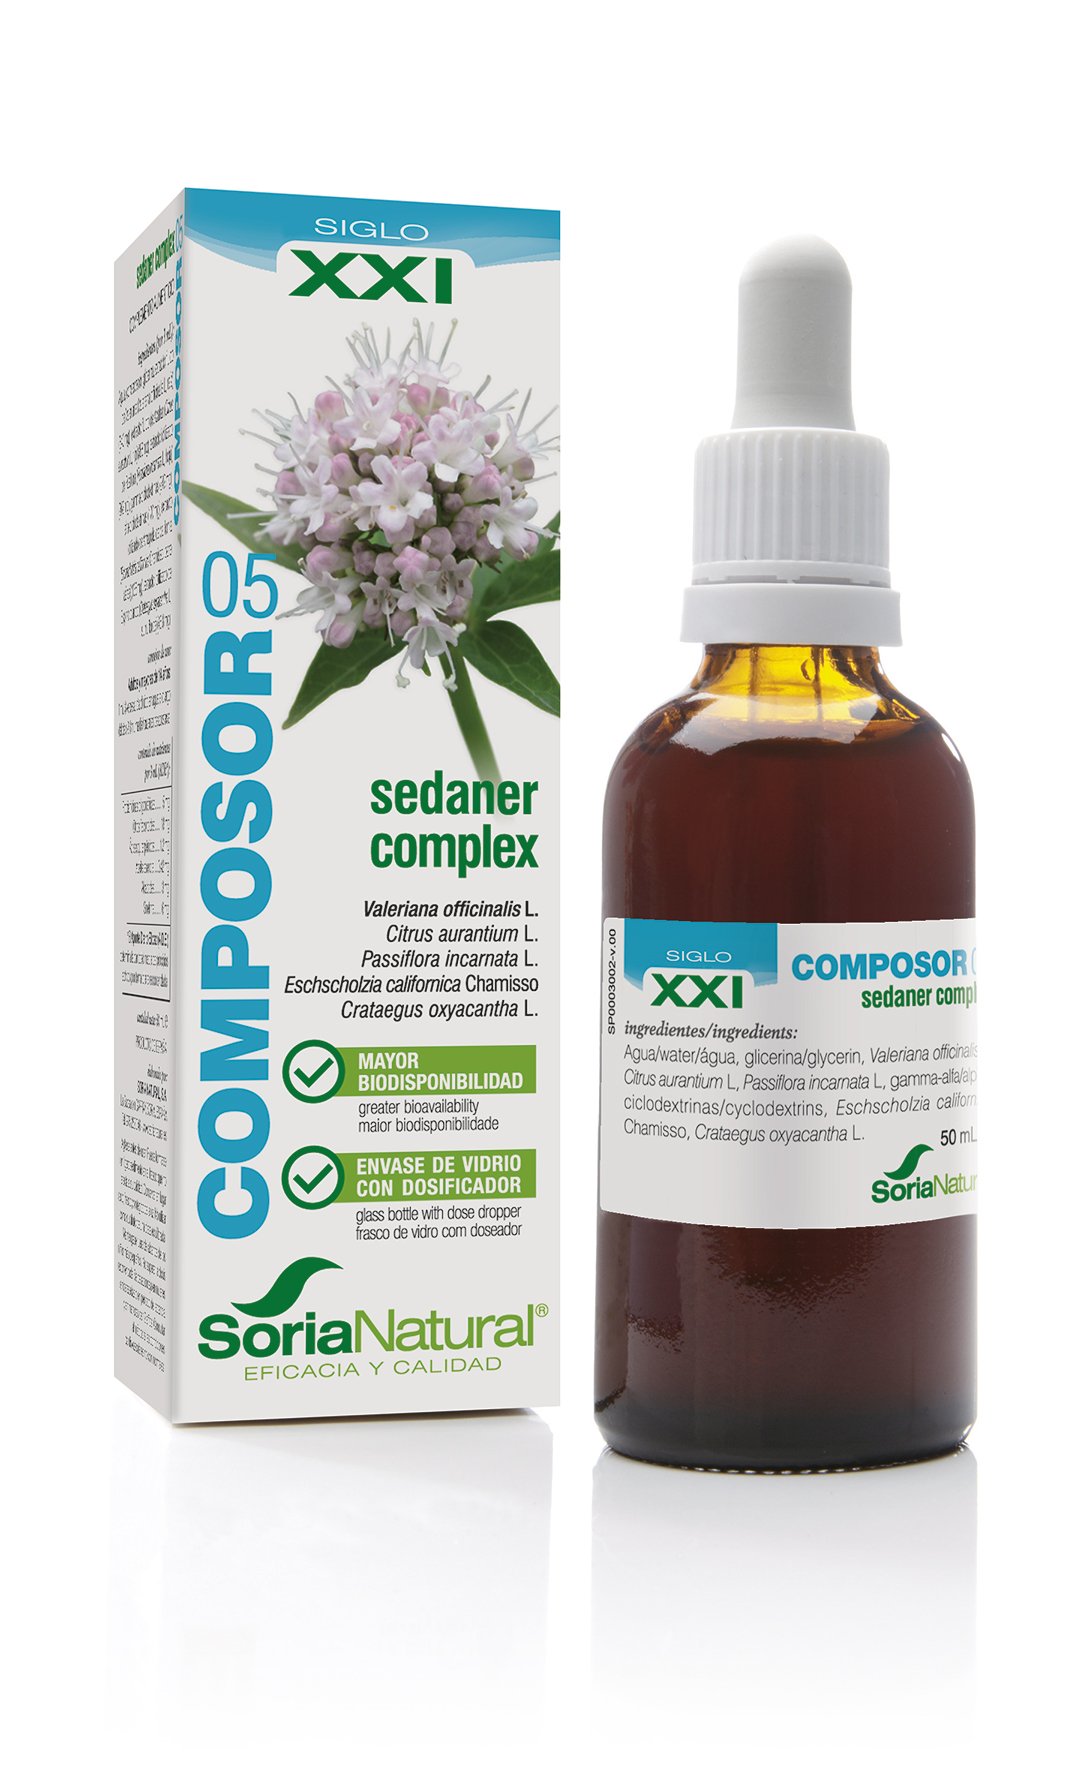 Soria Natural Siglo XXI Composor 05 sedaner complex, 50 ml